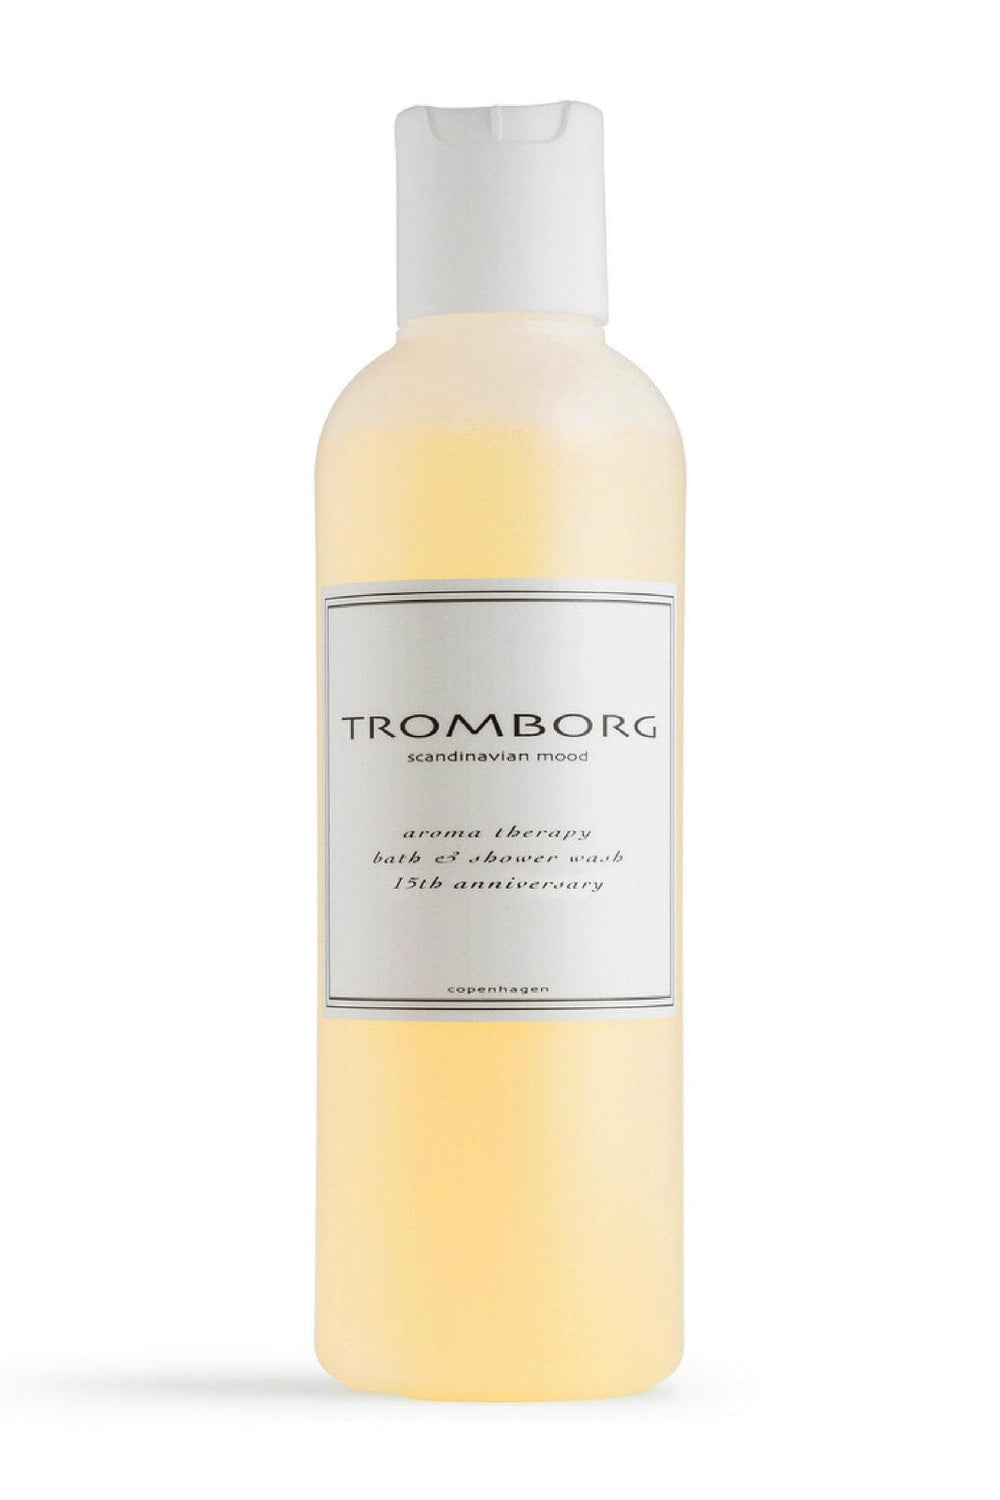 Tromborg - Aroma Therapy Bath & Shower Wash 15th Anniversary Bodywash 